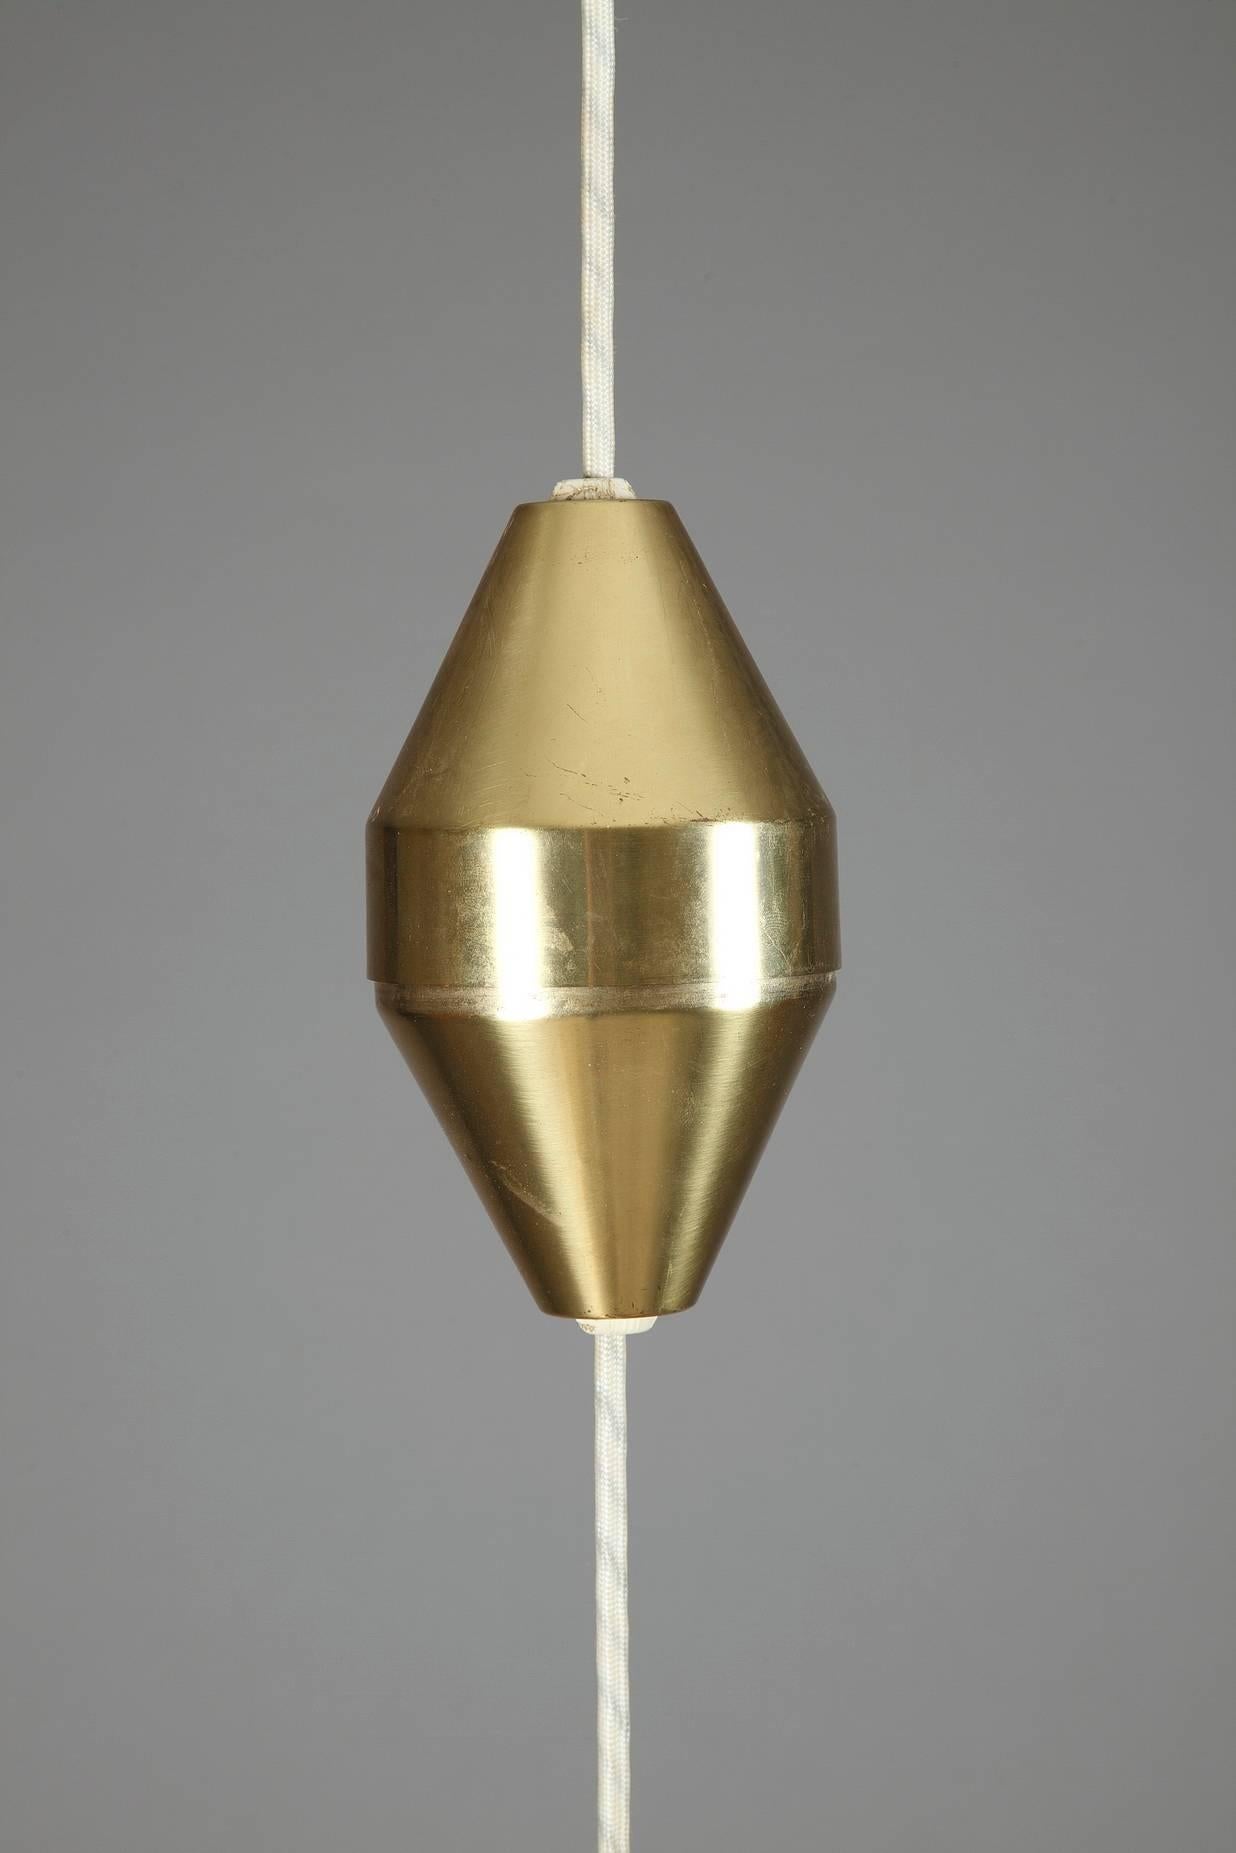 Danish 20th Century Brass Pendant With Adjustable Height Mechanism